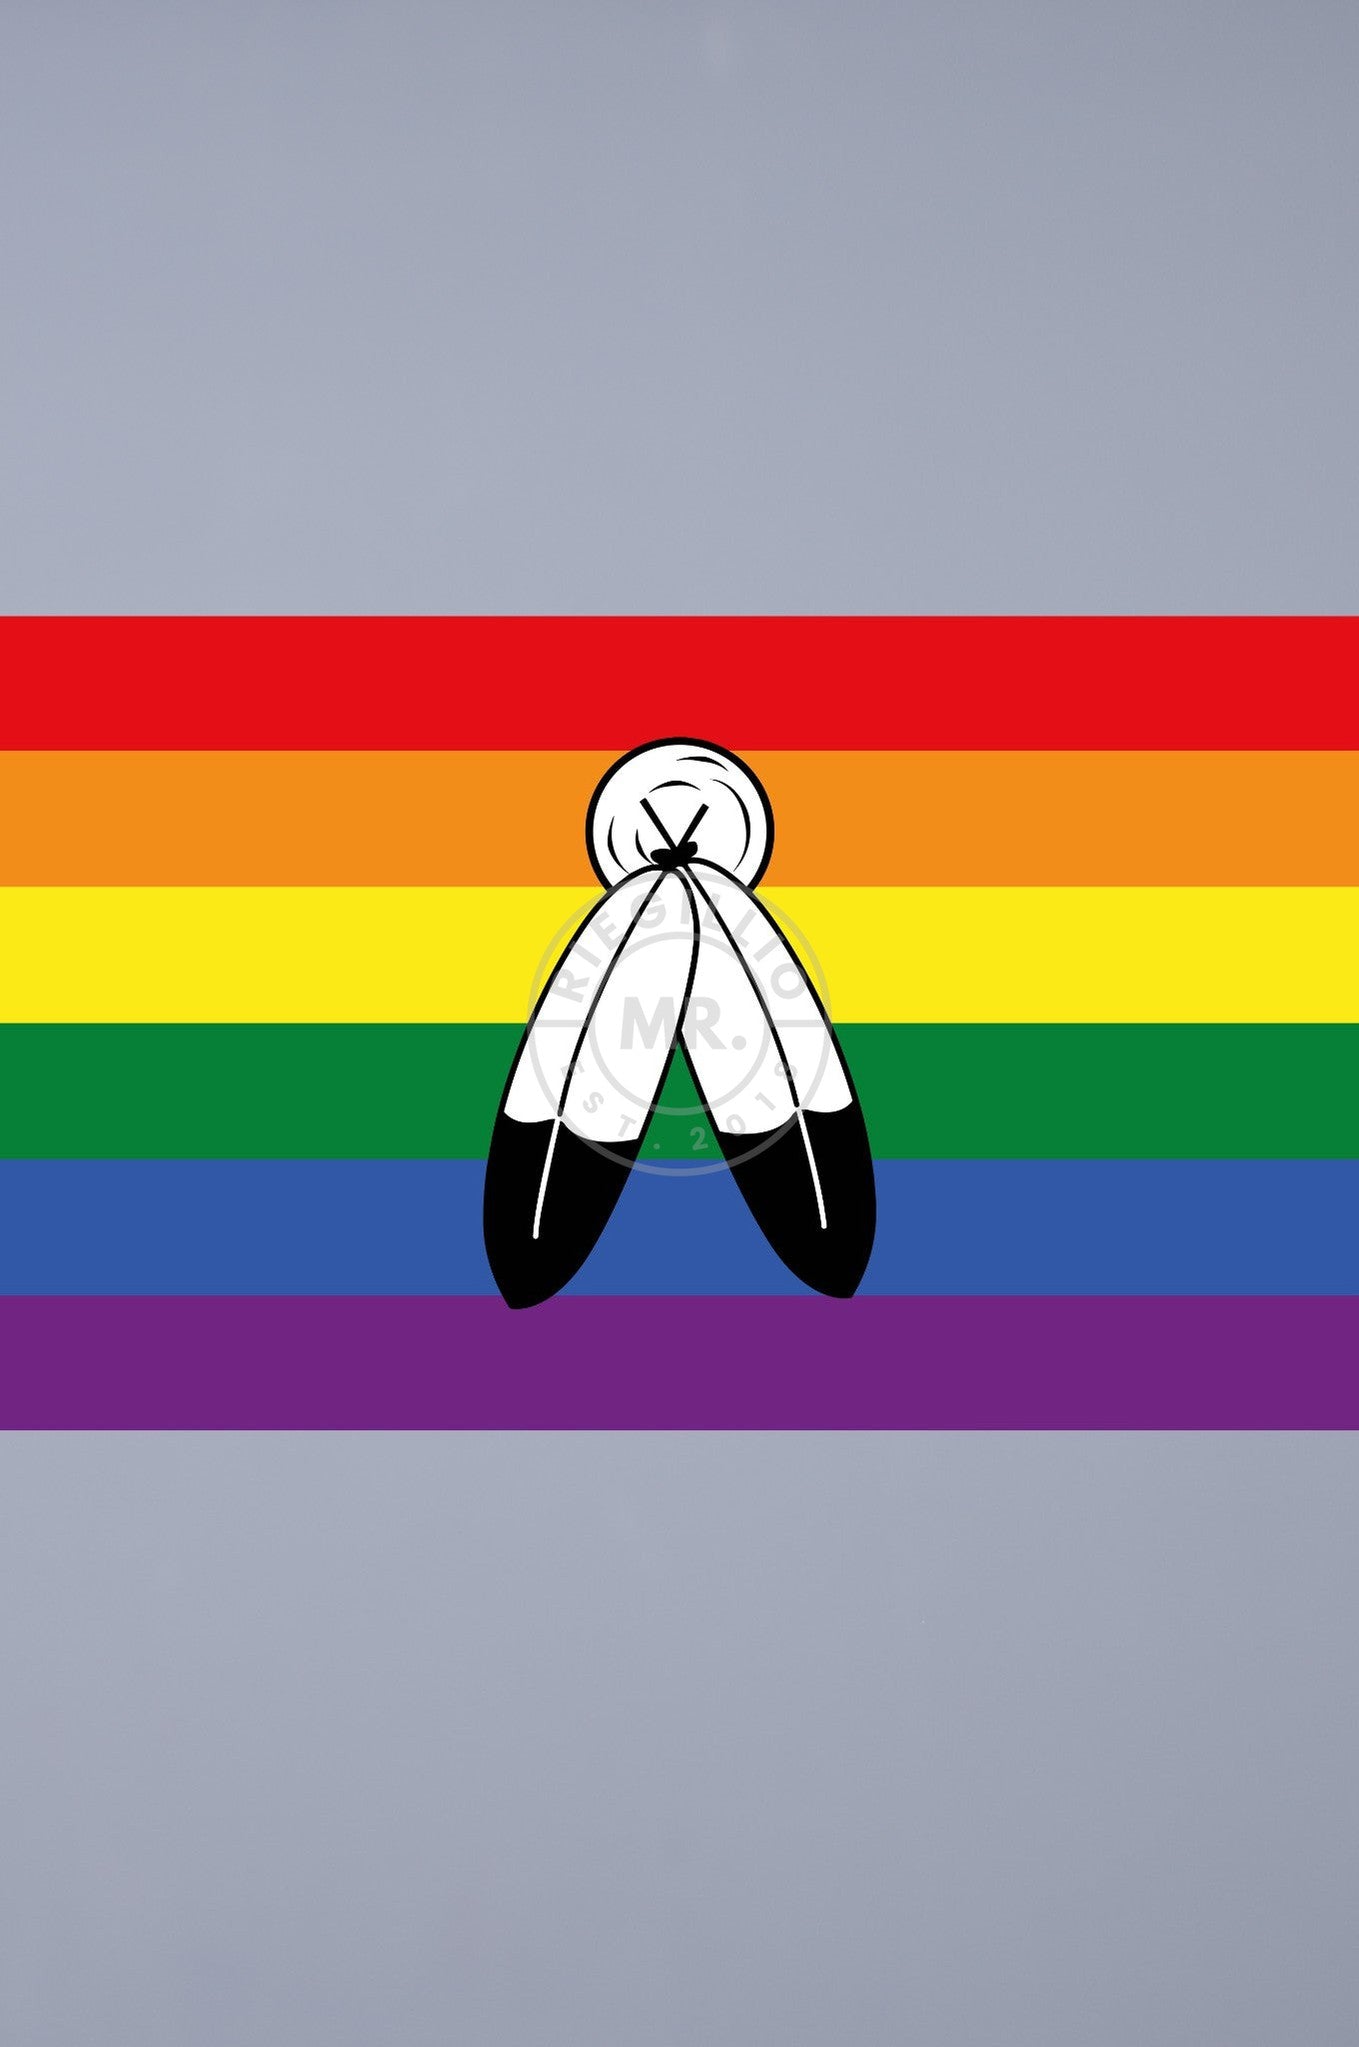 Pride Flag - Two-Spirits - 90 x 150 cm at MR. Riegillio